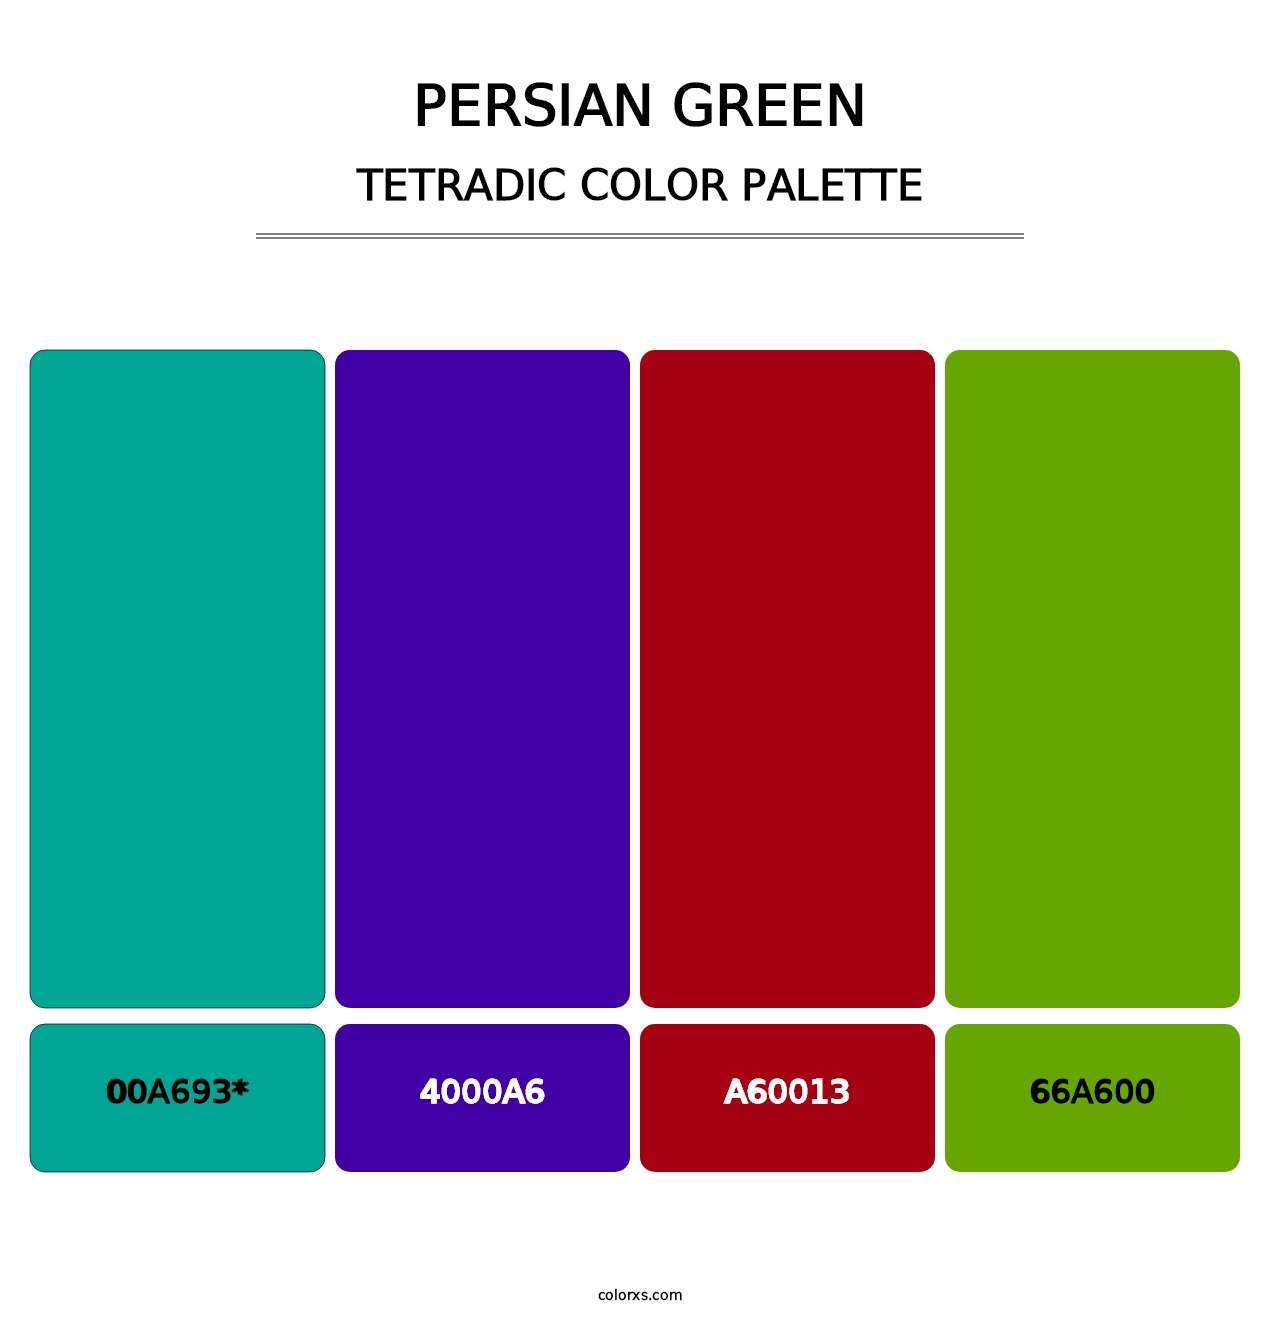 Persian Green - Tetradic Color Palette